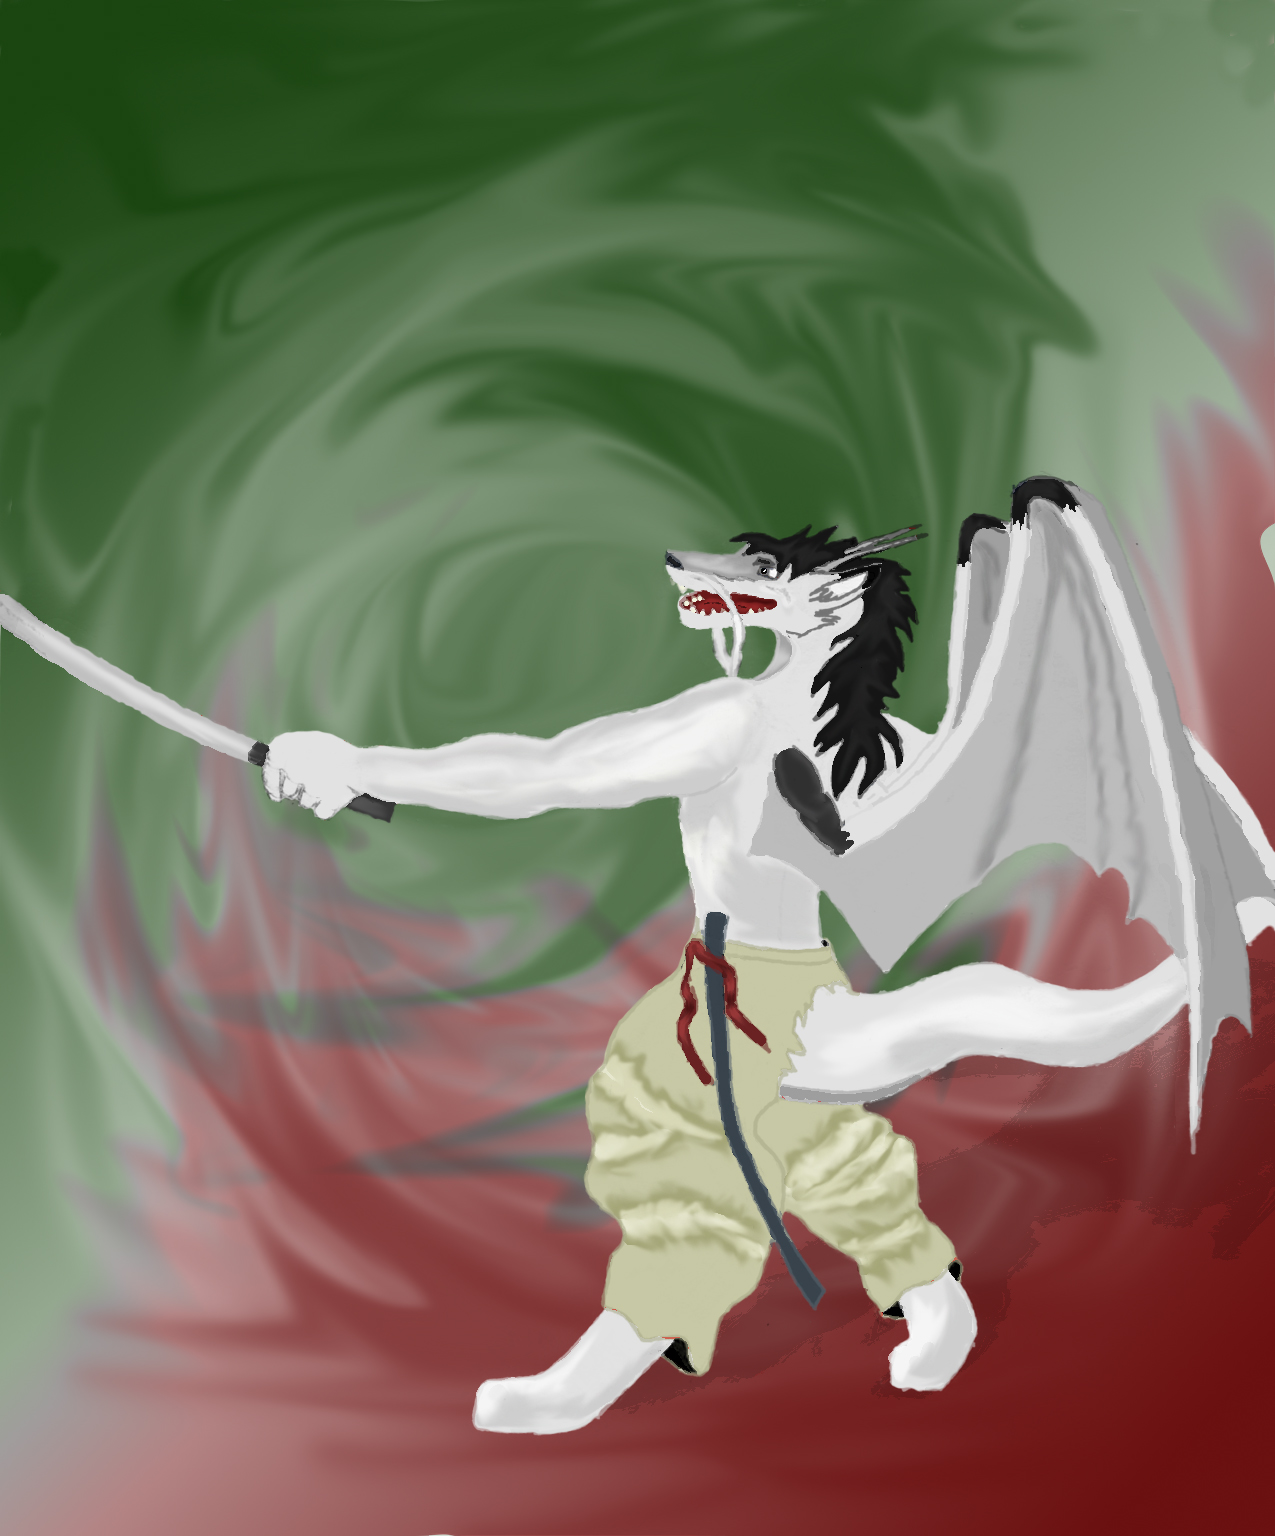 Kazul the White Dragon  (Shogun) by The_White_Dragon